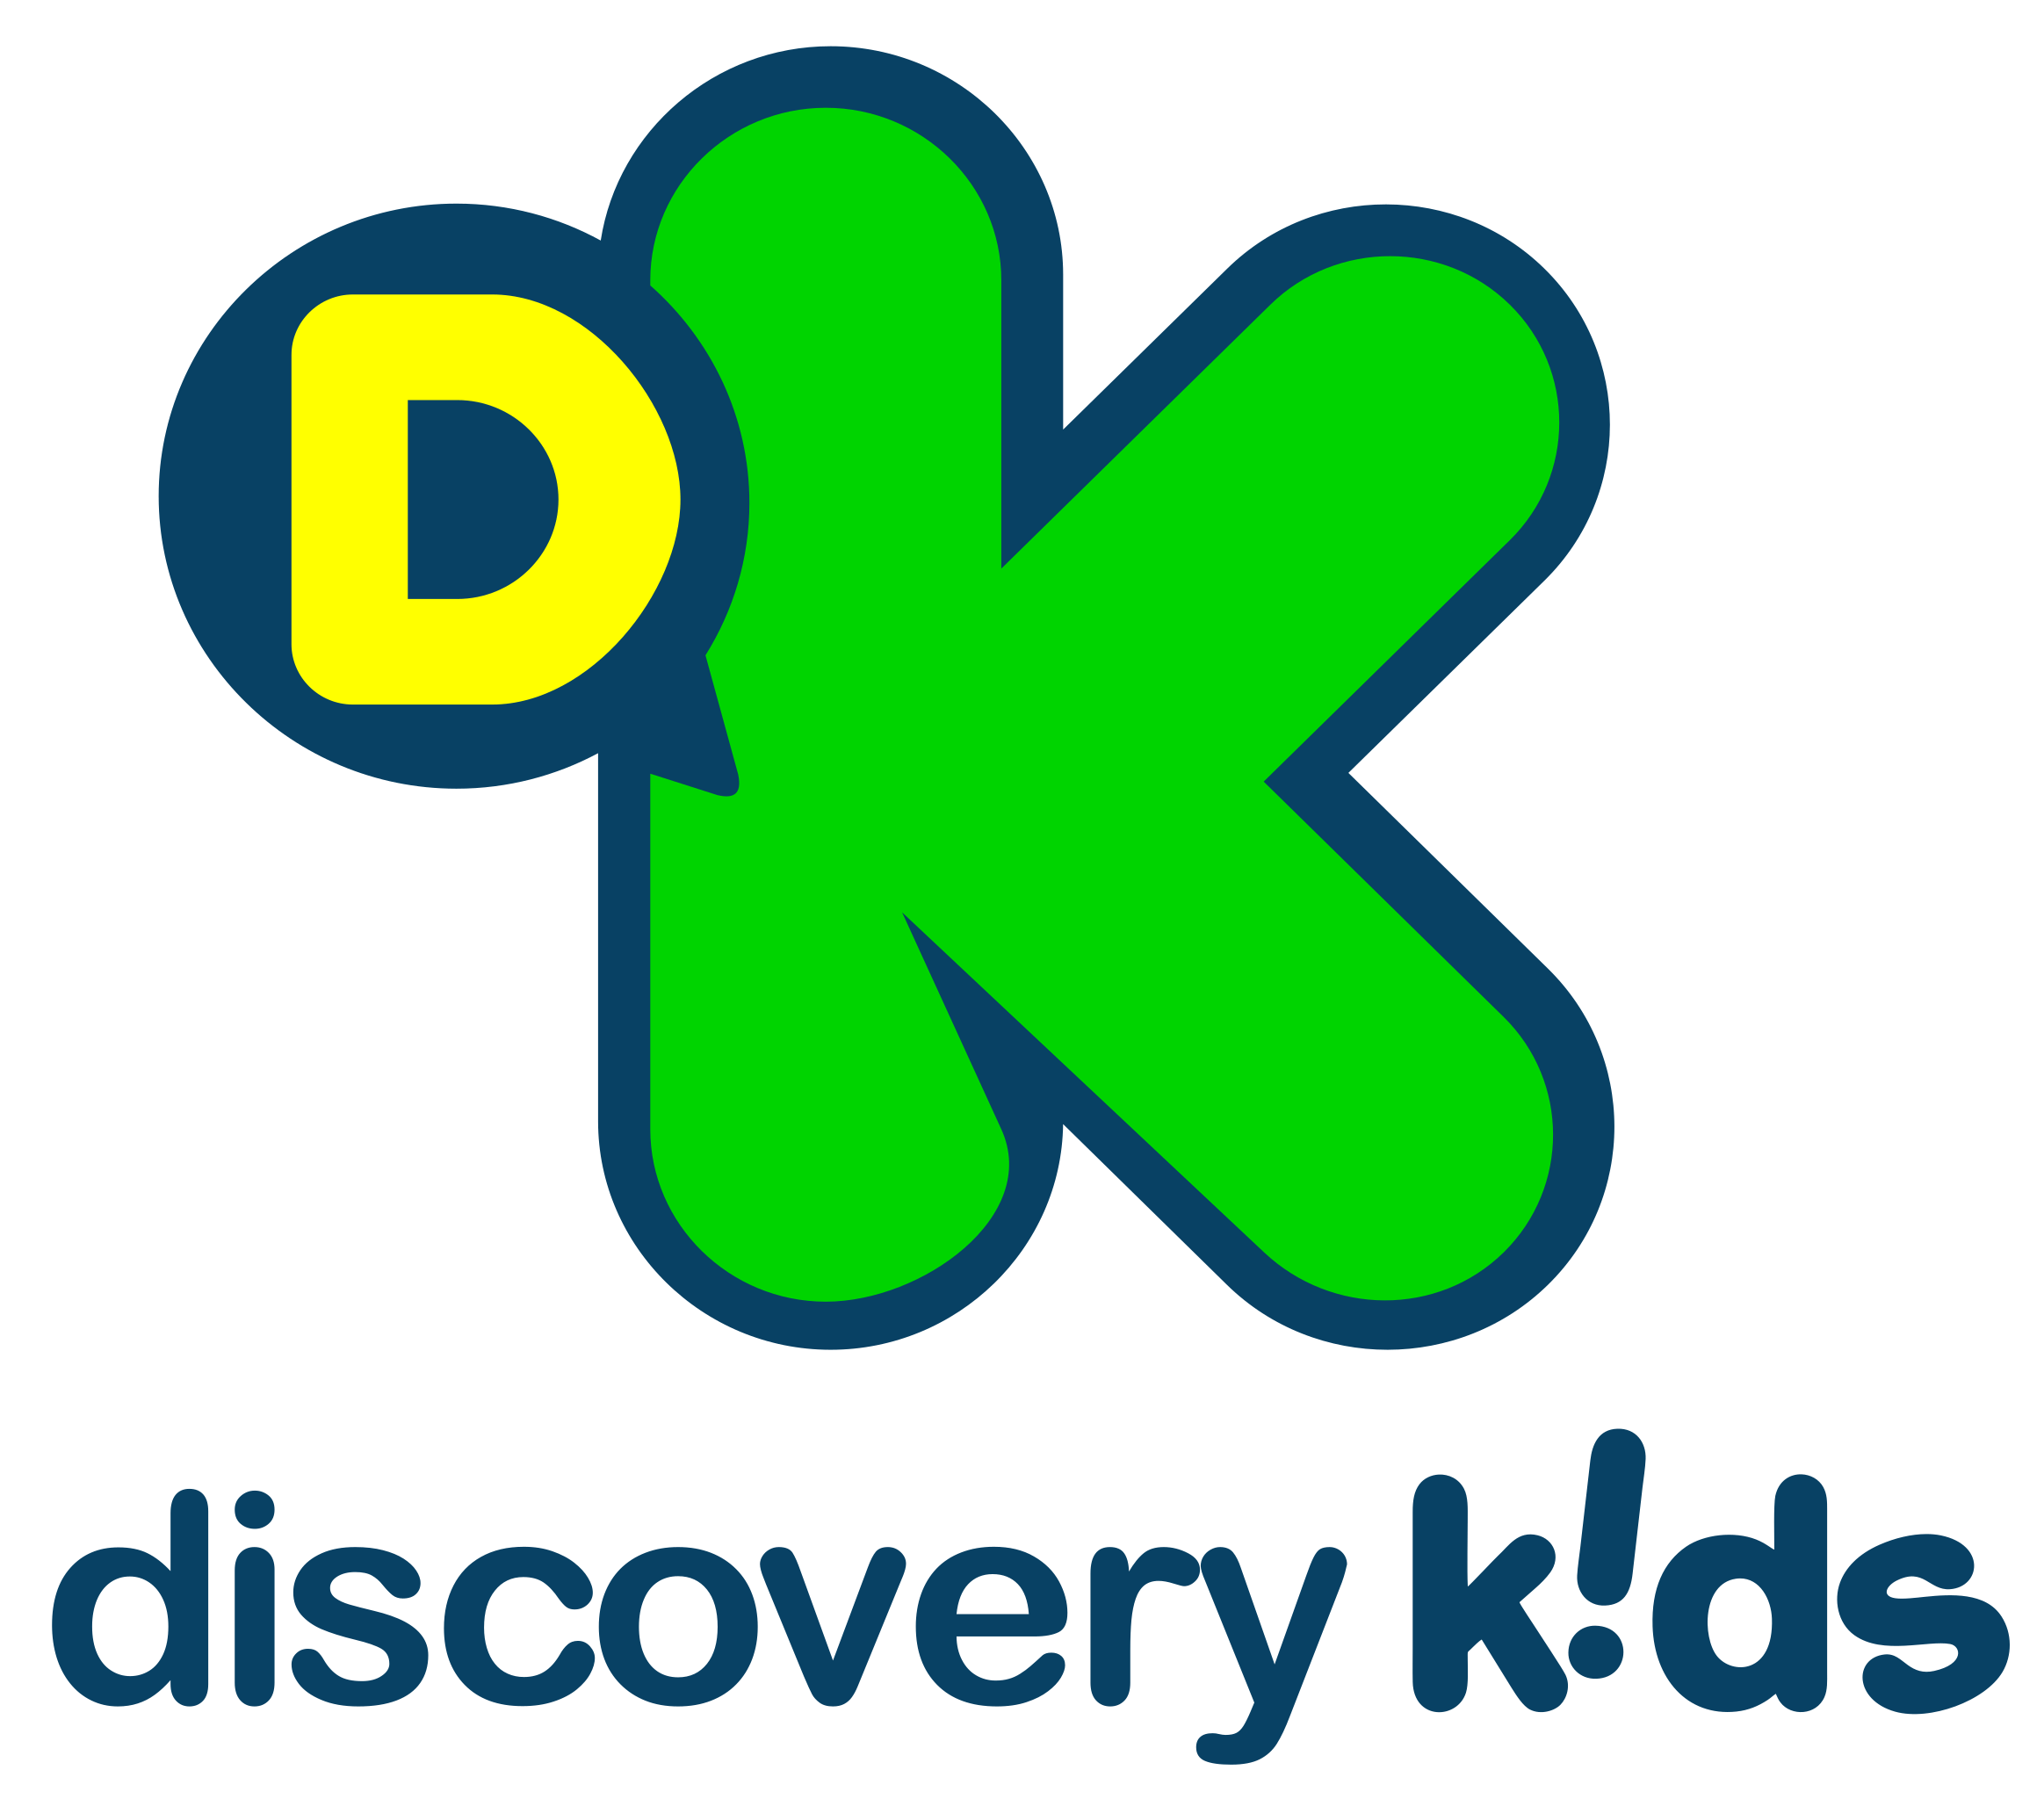 Discovery Kids Logo - Discovery Kids logo.svg